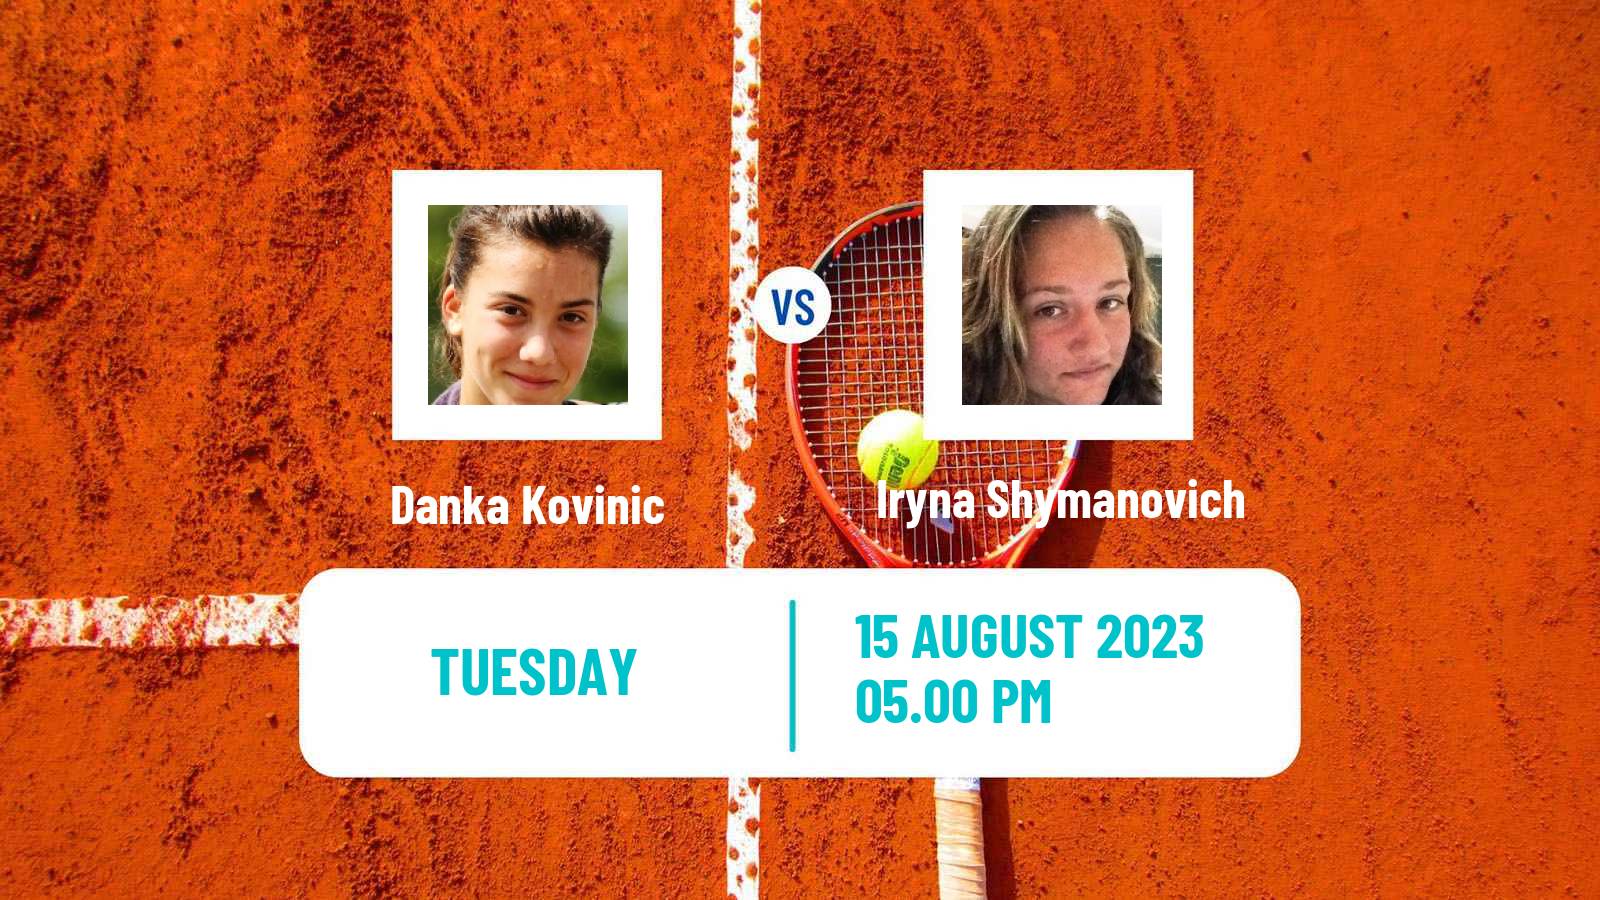 Tennis Stanford Challenger Women Danka Kovinic - Iryna Shymanovich